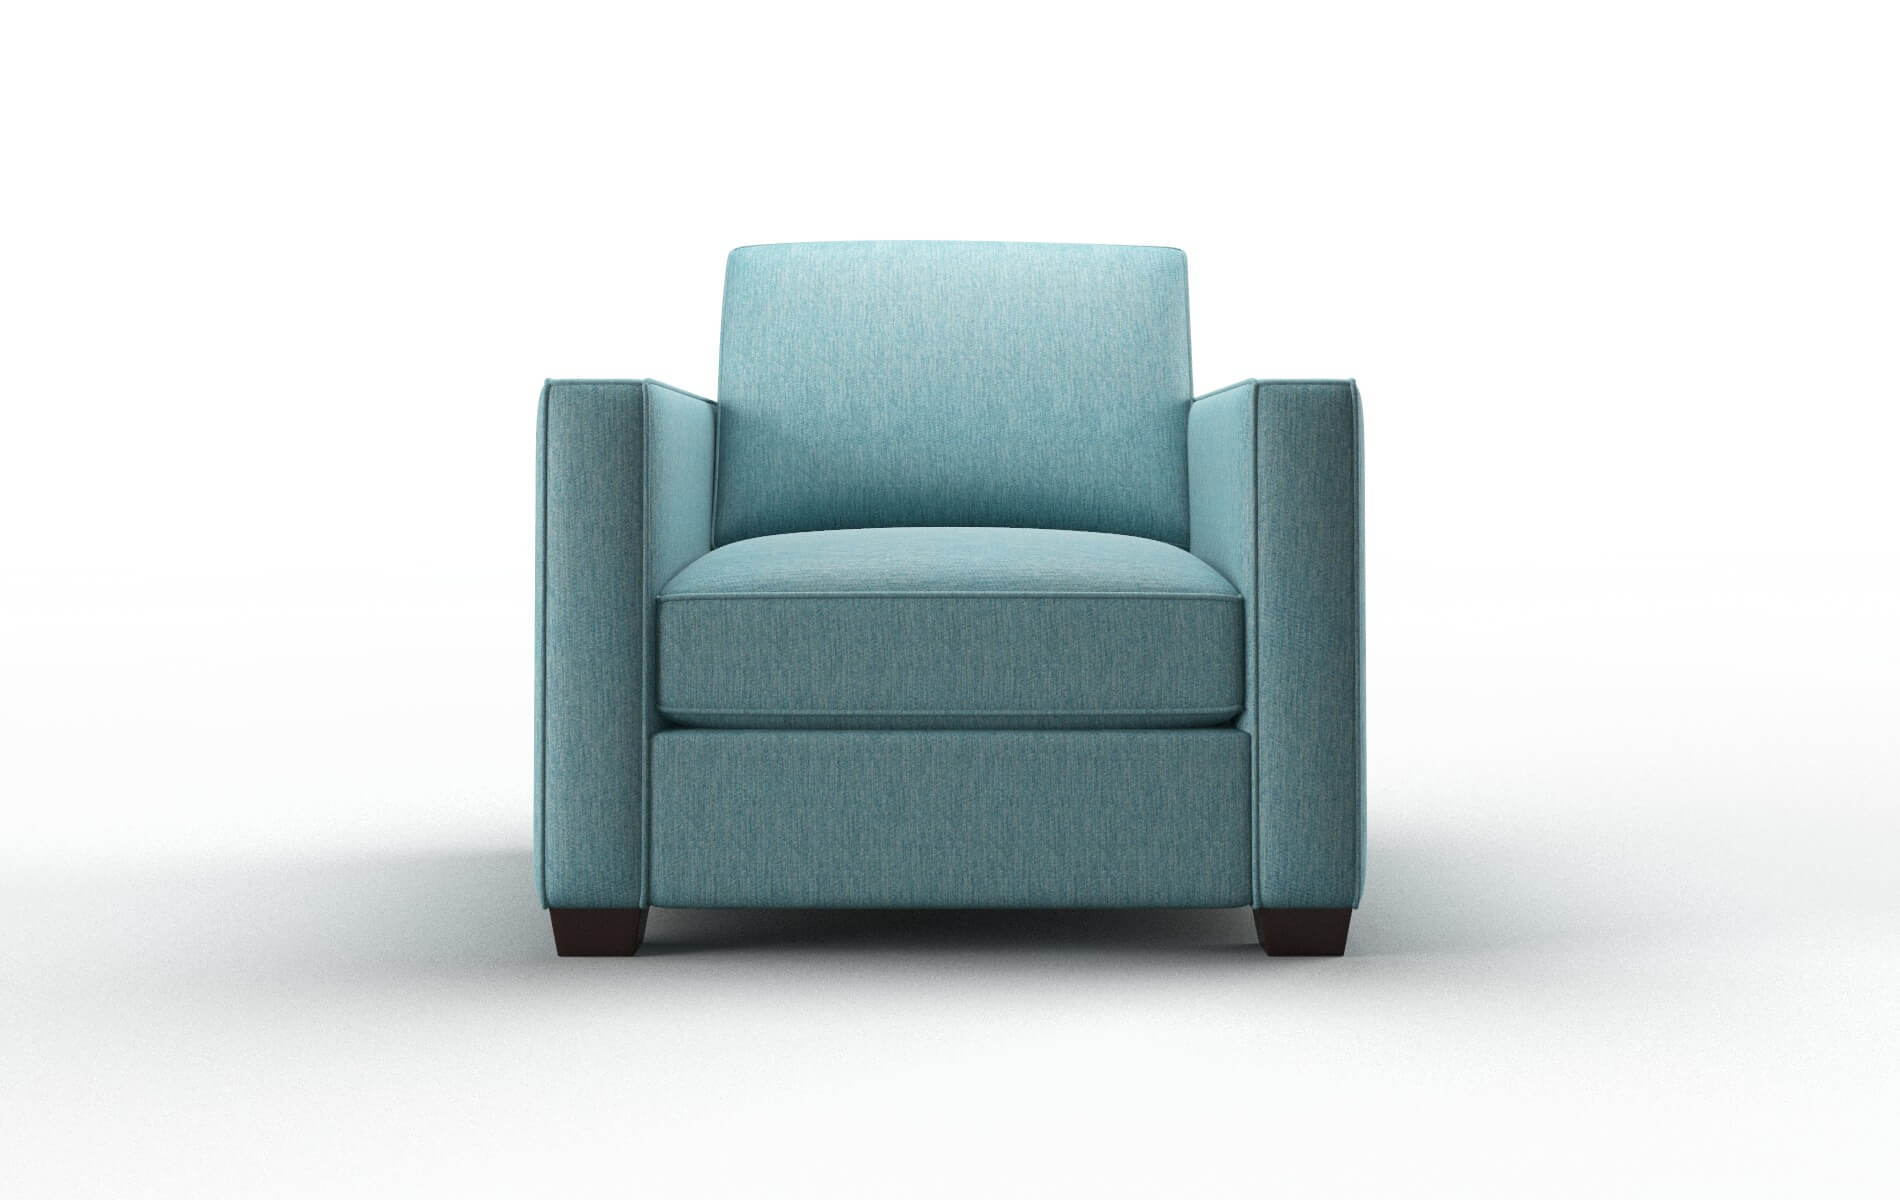 Calgary Cosmo Turquoise chair espresso legs